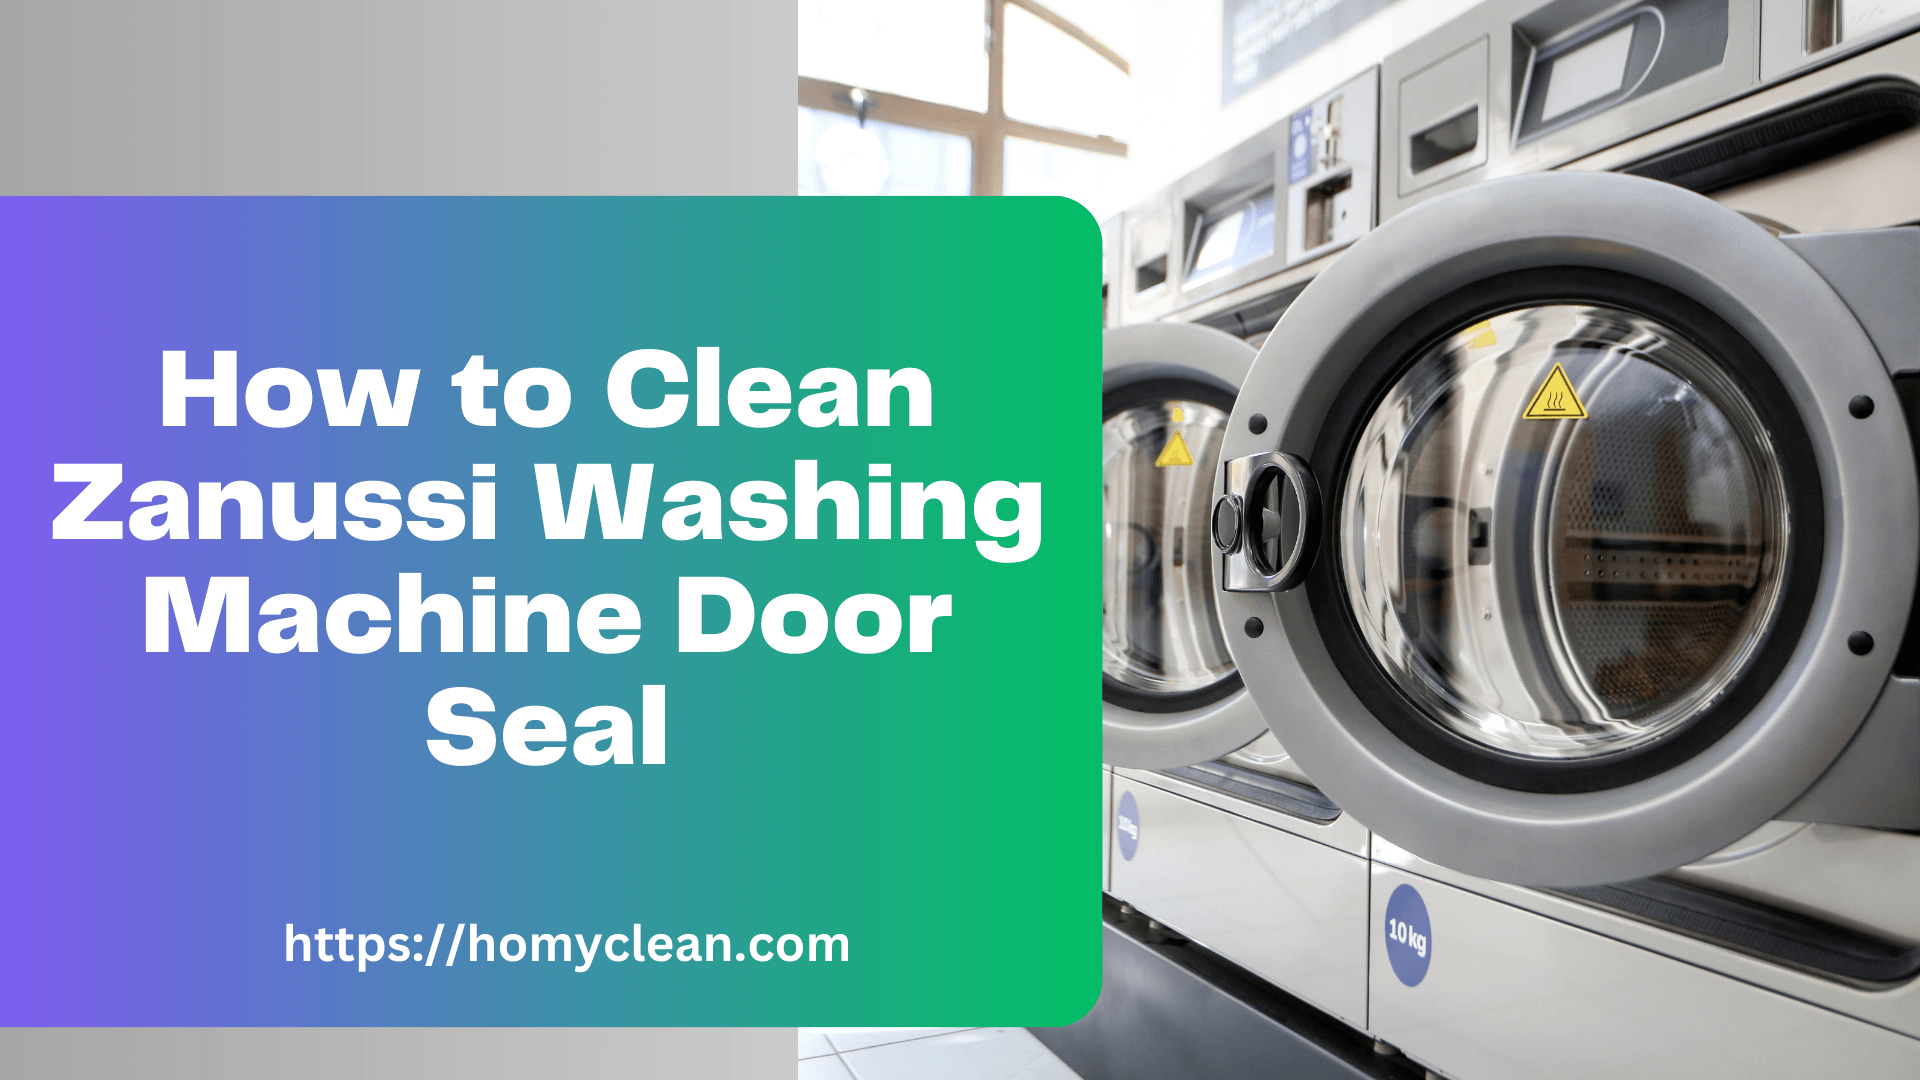 How to Clean Zanussi Washing Machine Door Seal